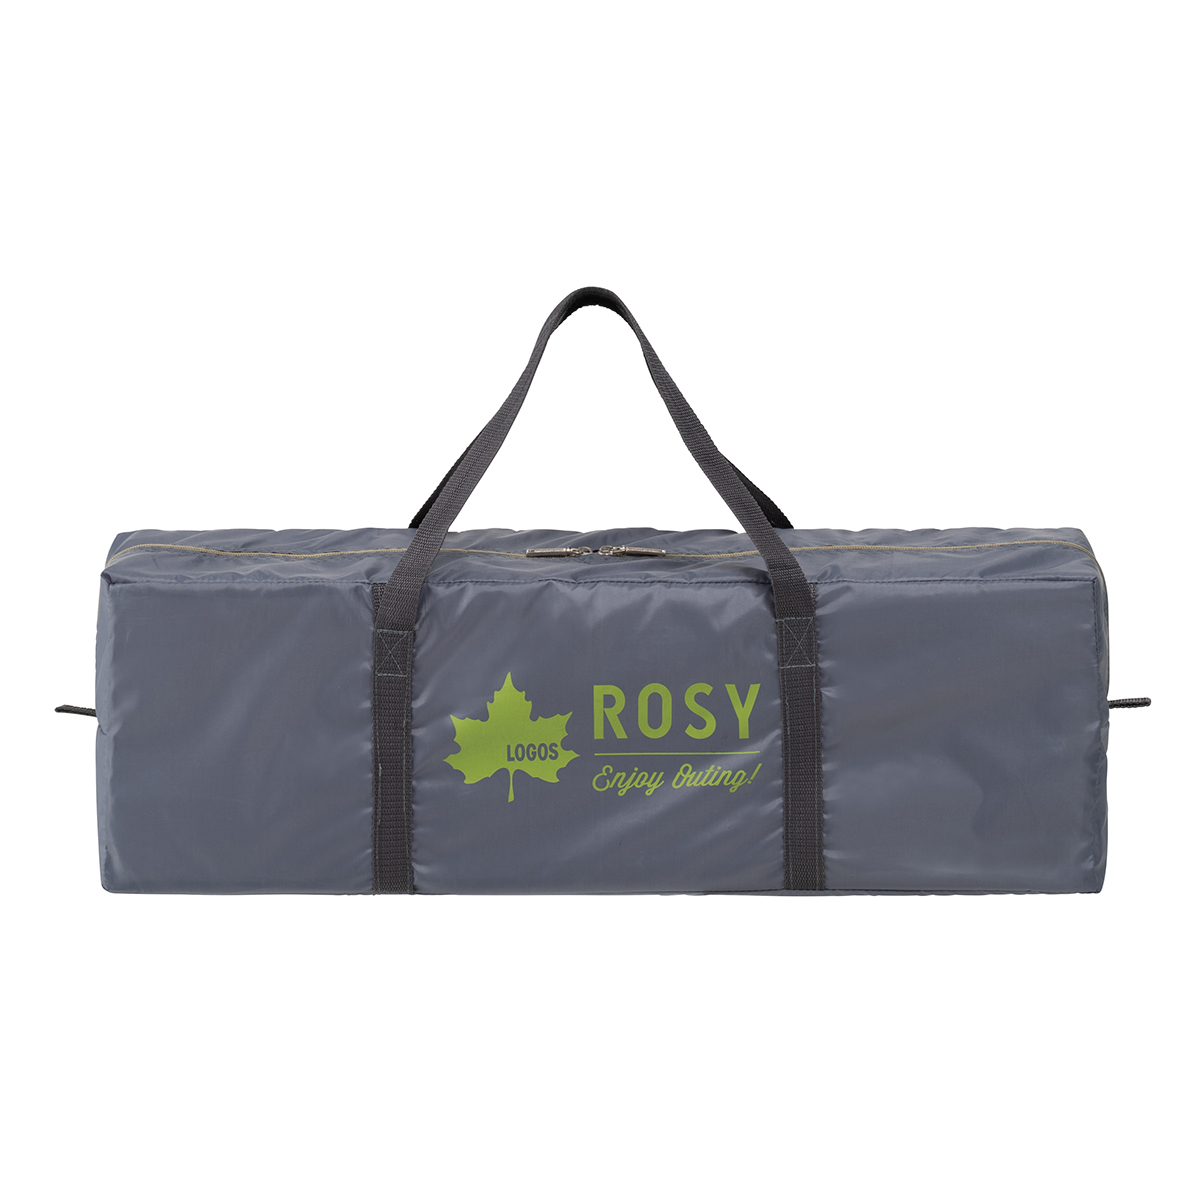 ROSY オーニングドーム XLプラス-BB|ギア|テント|2ルーム|製品情報 ...